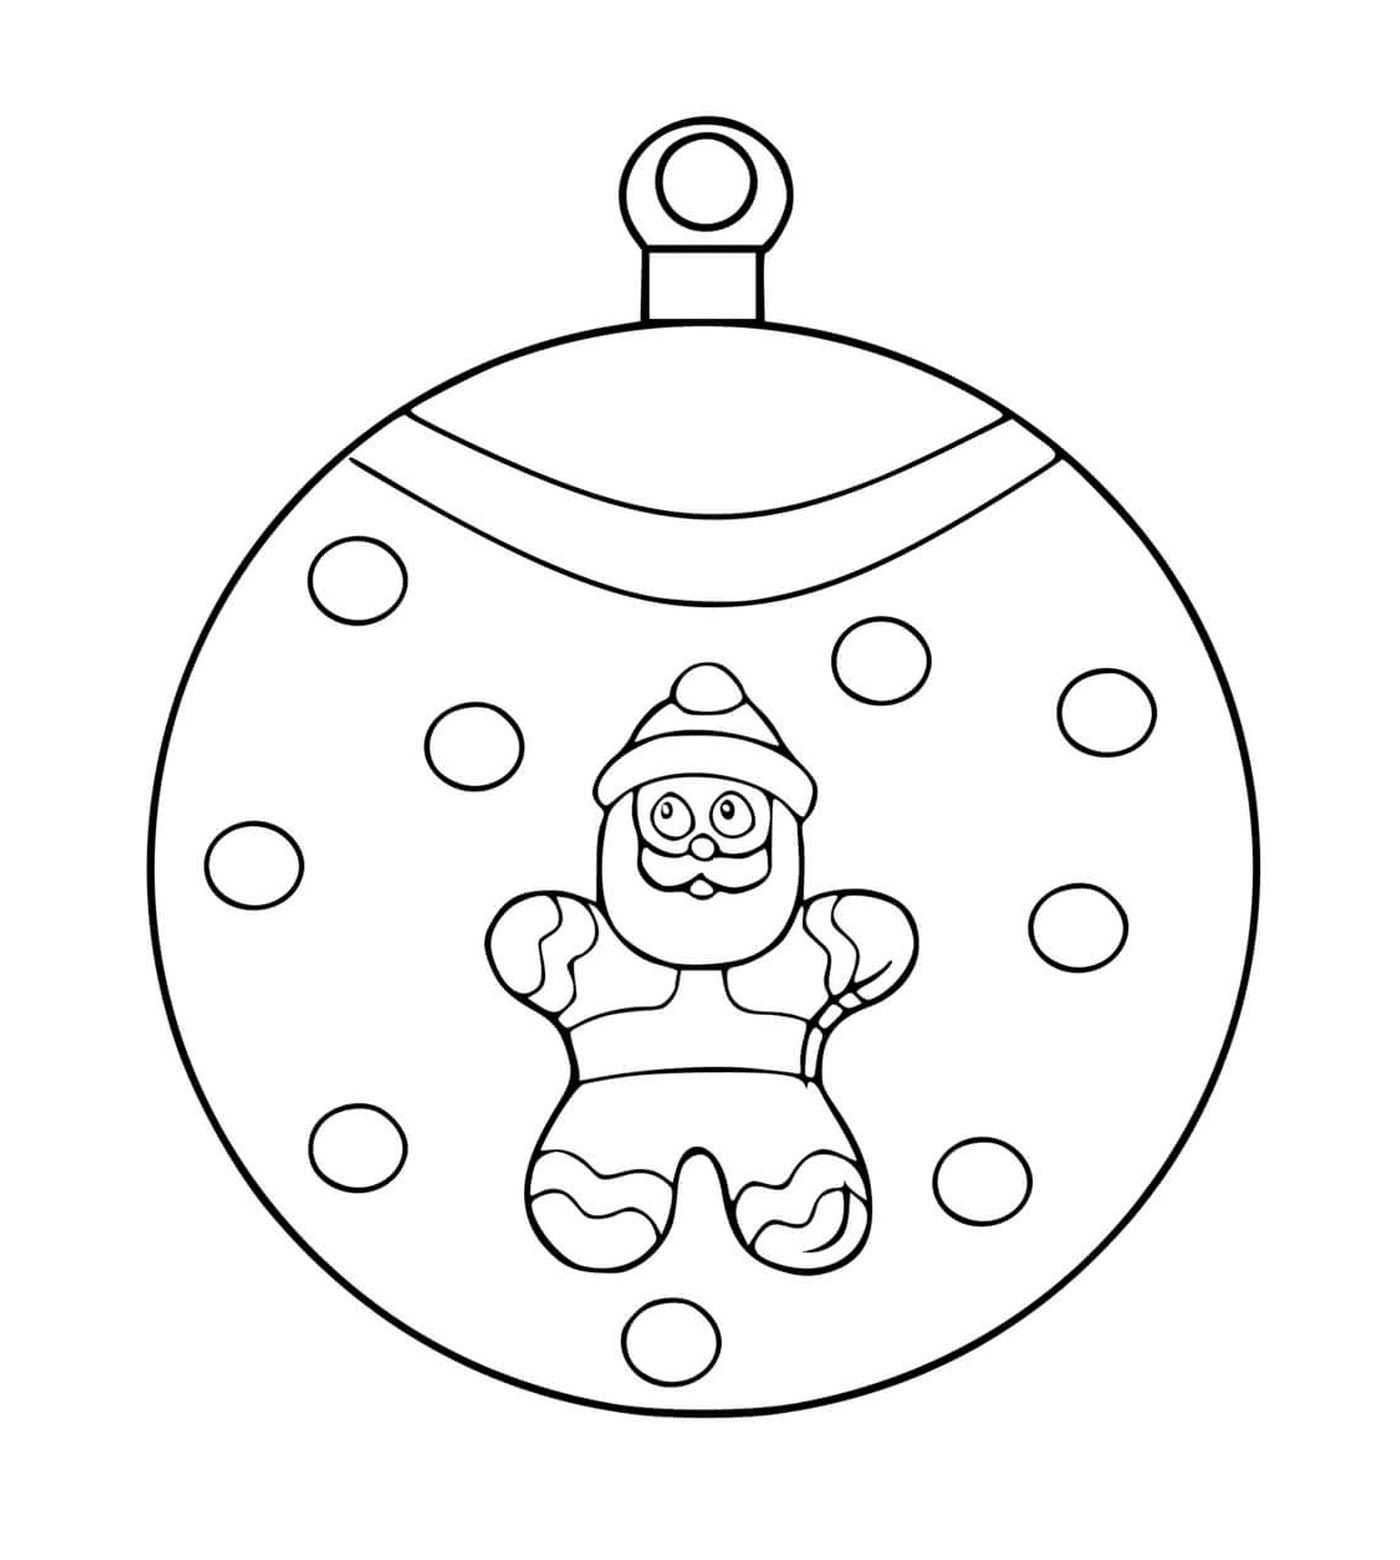  A Christmas ball with a Santa Claus 